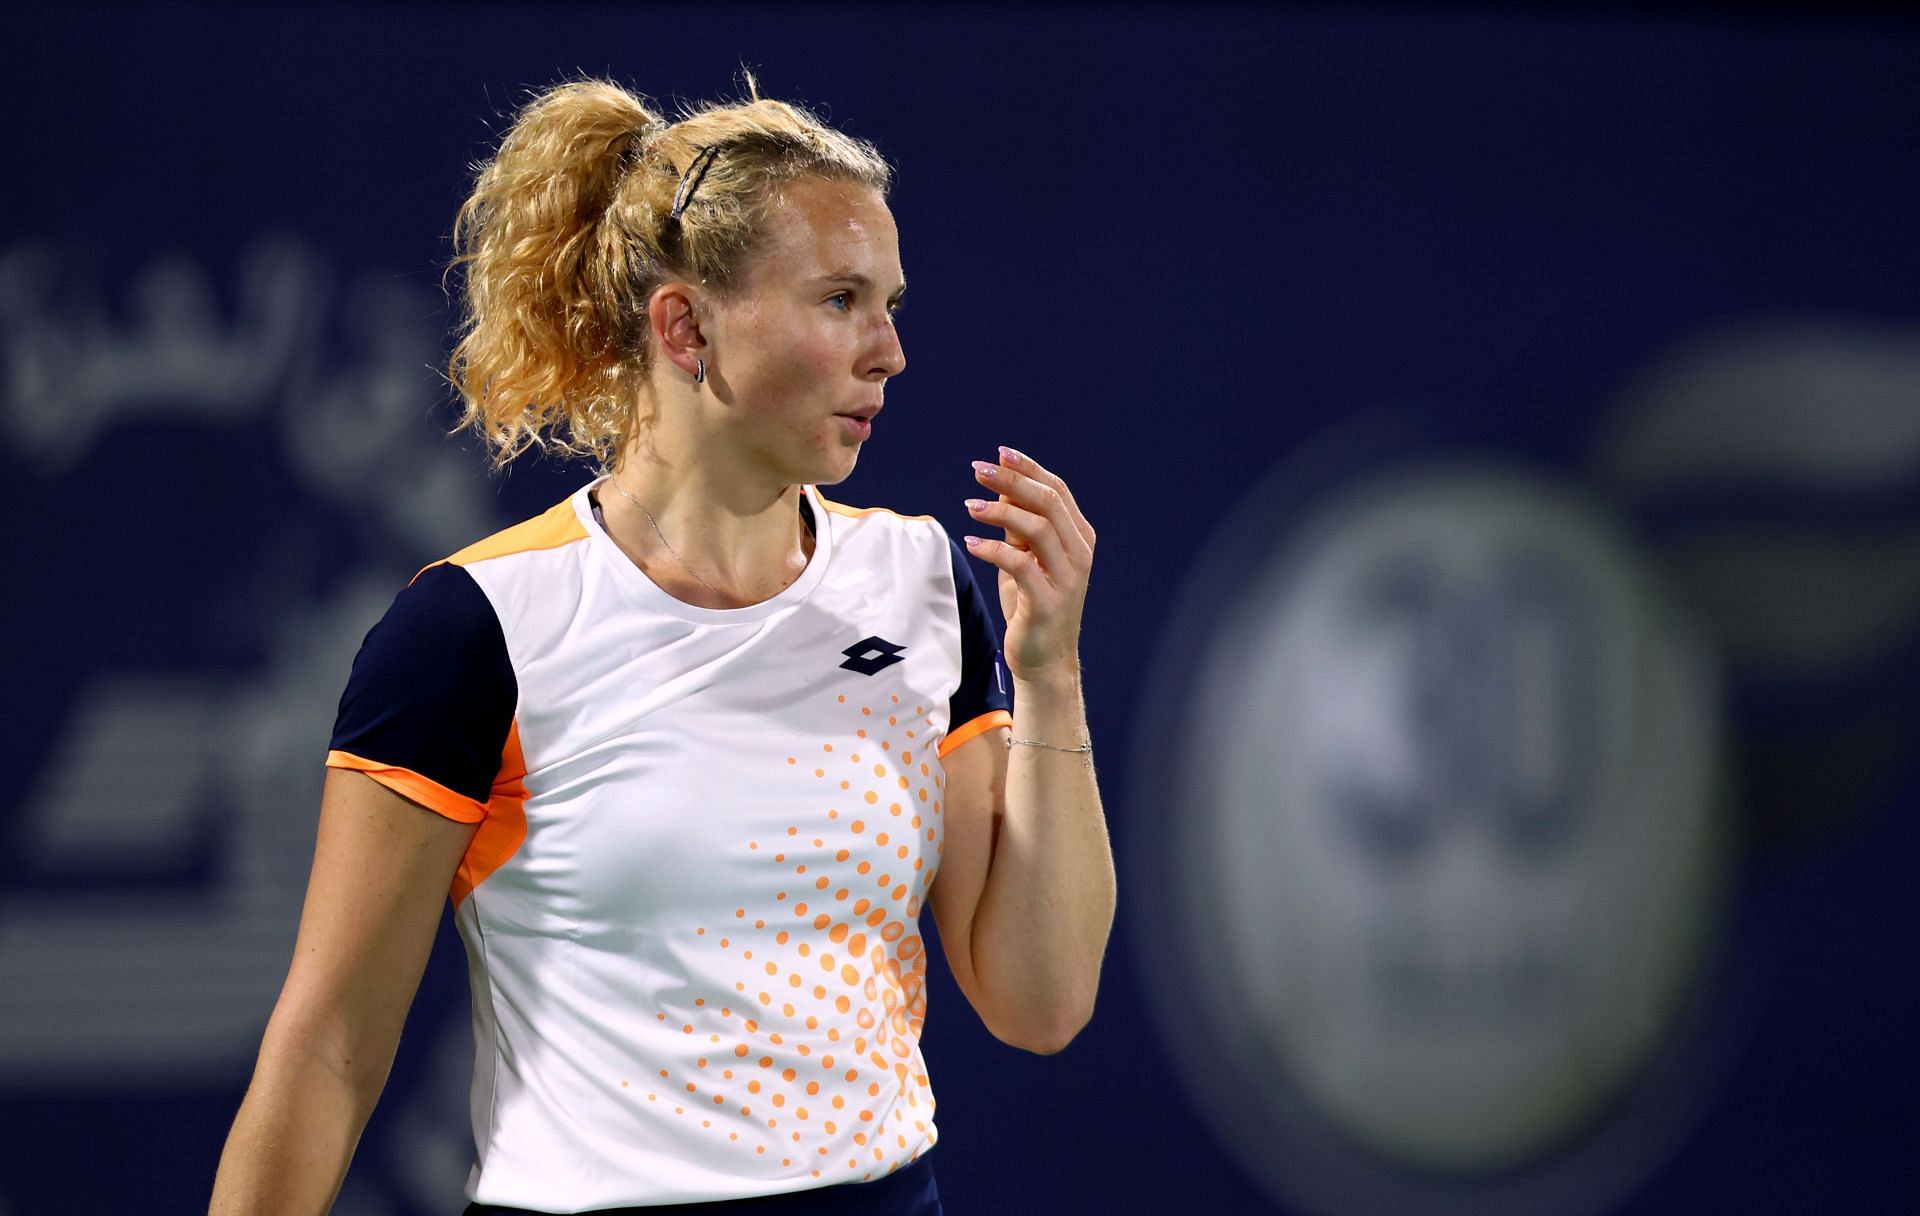 Siniakova during a match in Dubai